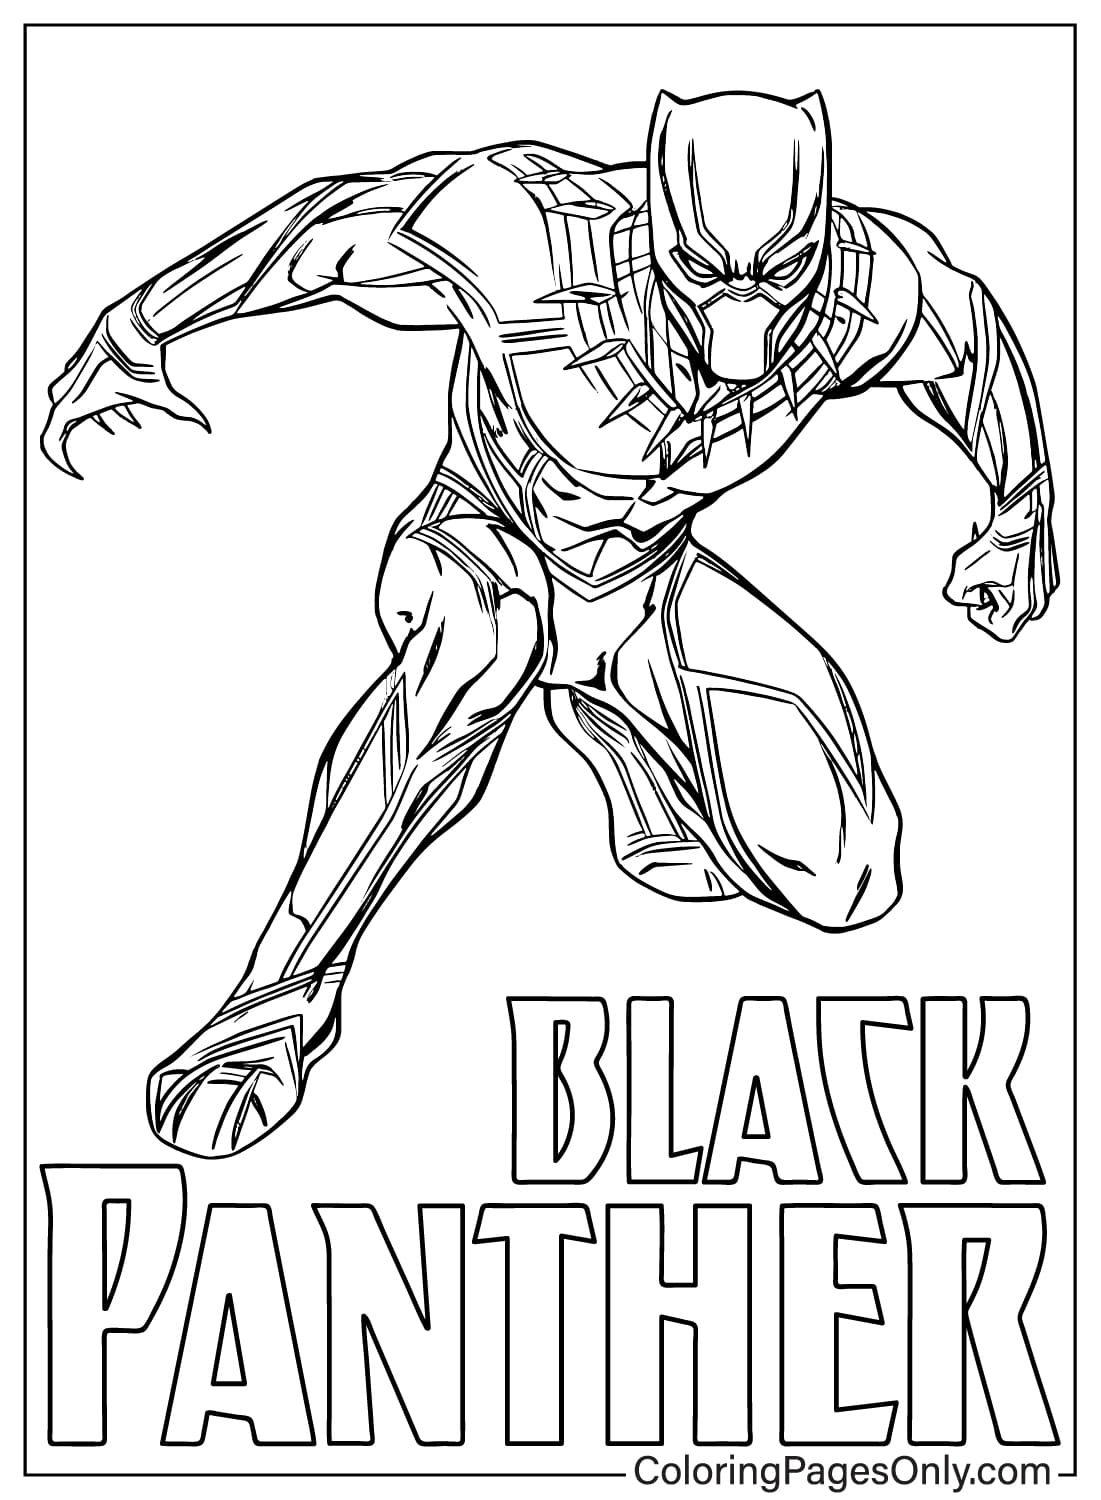 Black Panther Coloring Page Free Printable